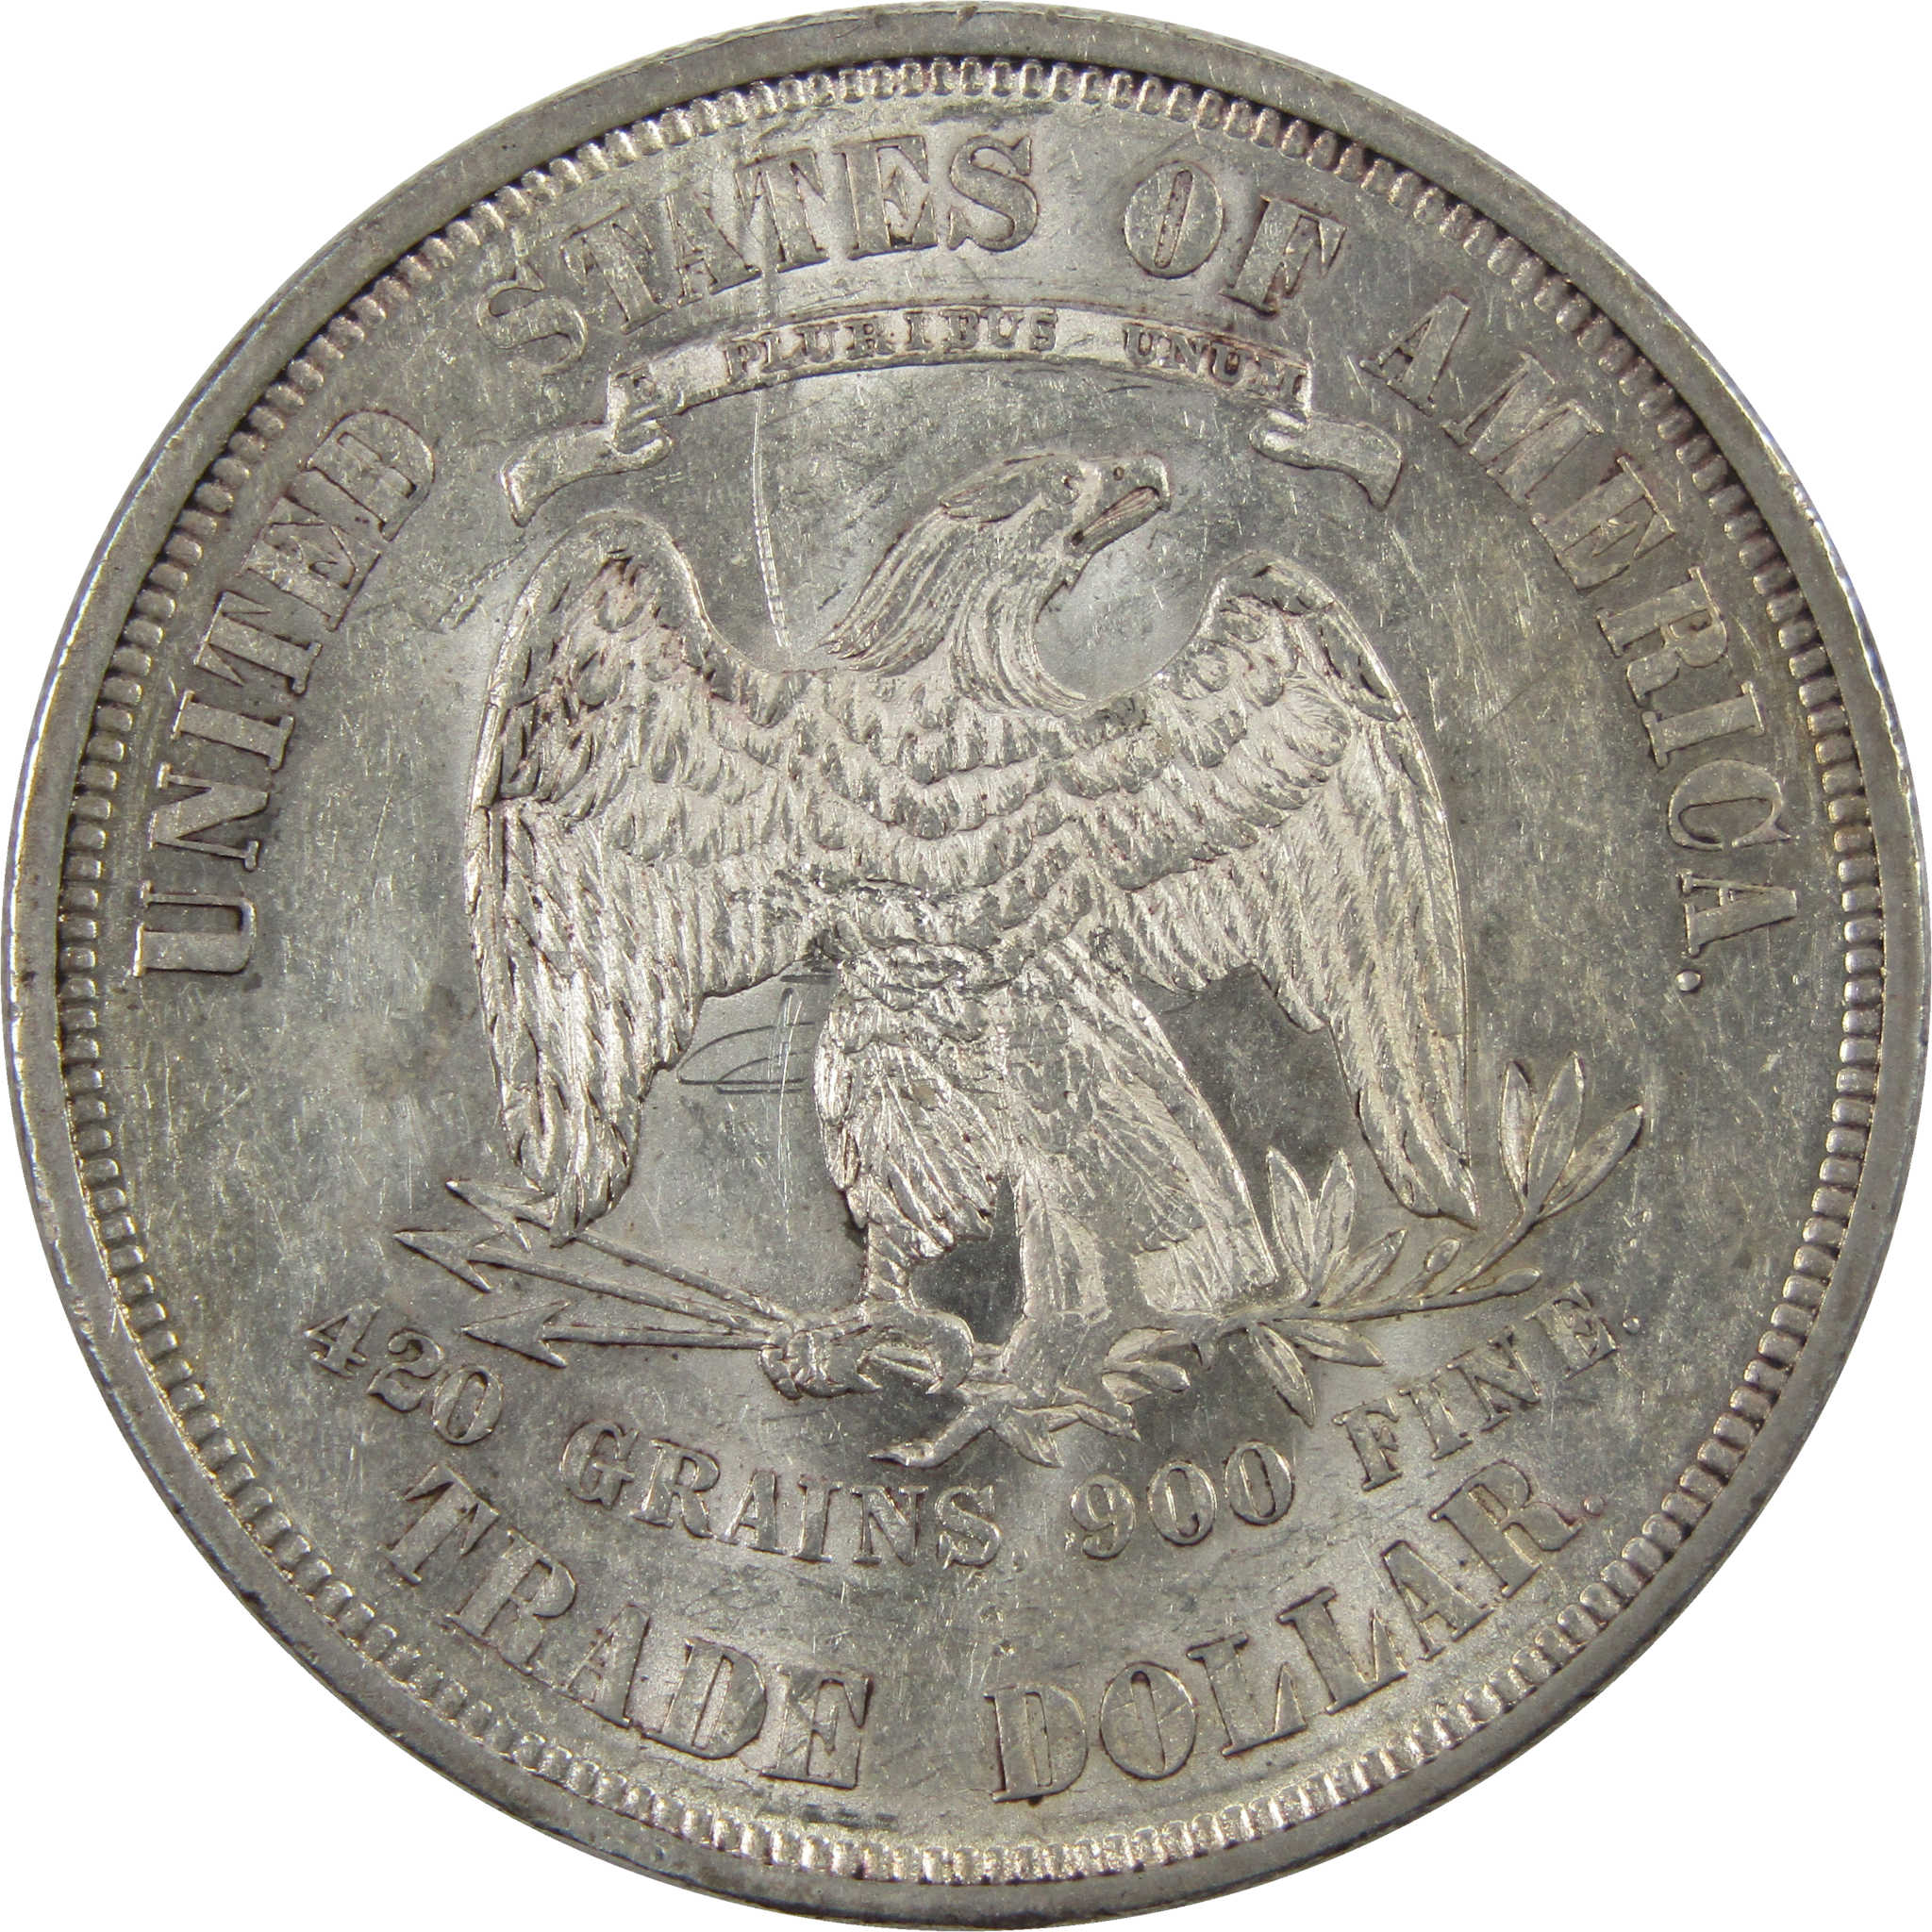 1874 Trade Dollar Borderline Uncirculated 90% Silver $1 Coin SKU:I5991